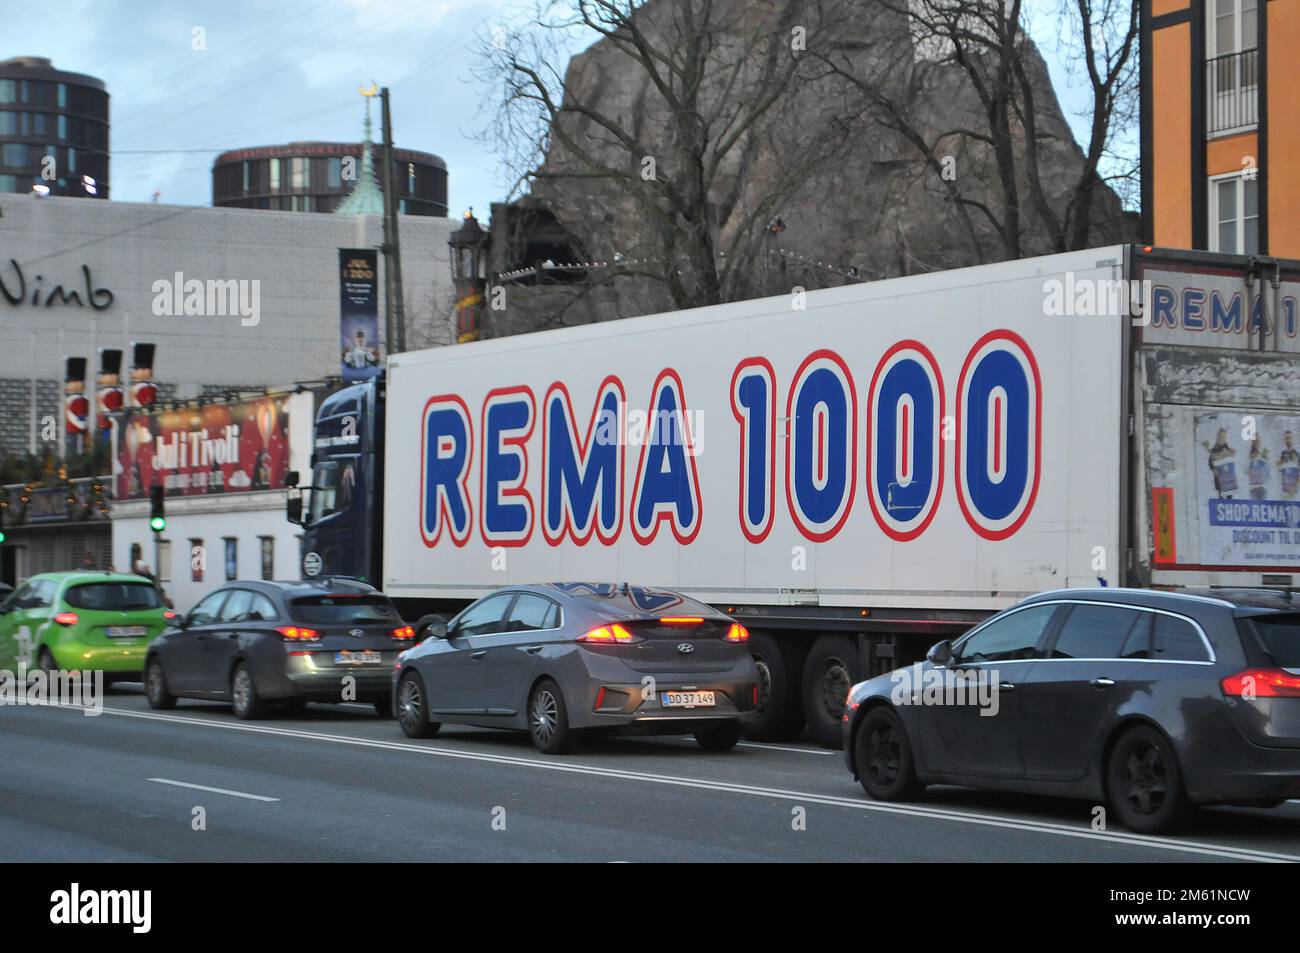 Jyerup/Dänemark/01. Januar 2023/Rema 1000 Fiod deliveery Truck in Aktion am 1. januar 2023 in dänischer Hauptstadt. (Foto: Francis Joseph Dean/Dean Pictures) Stockfoto